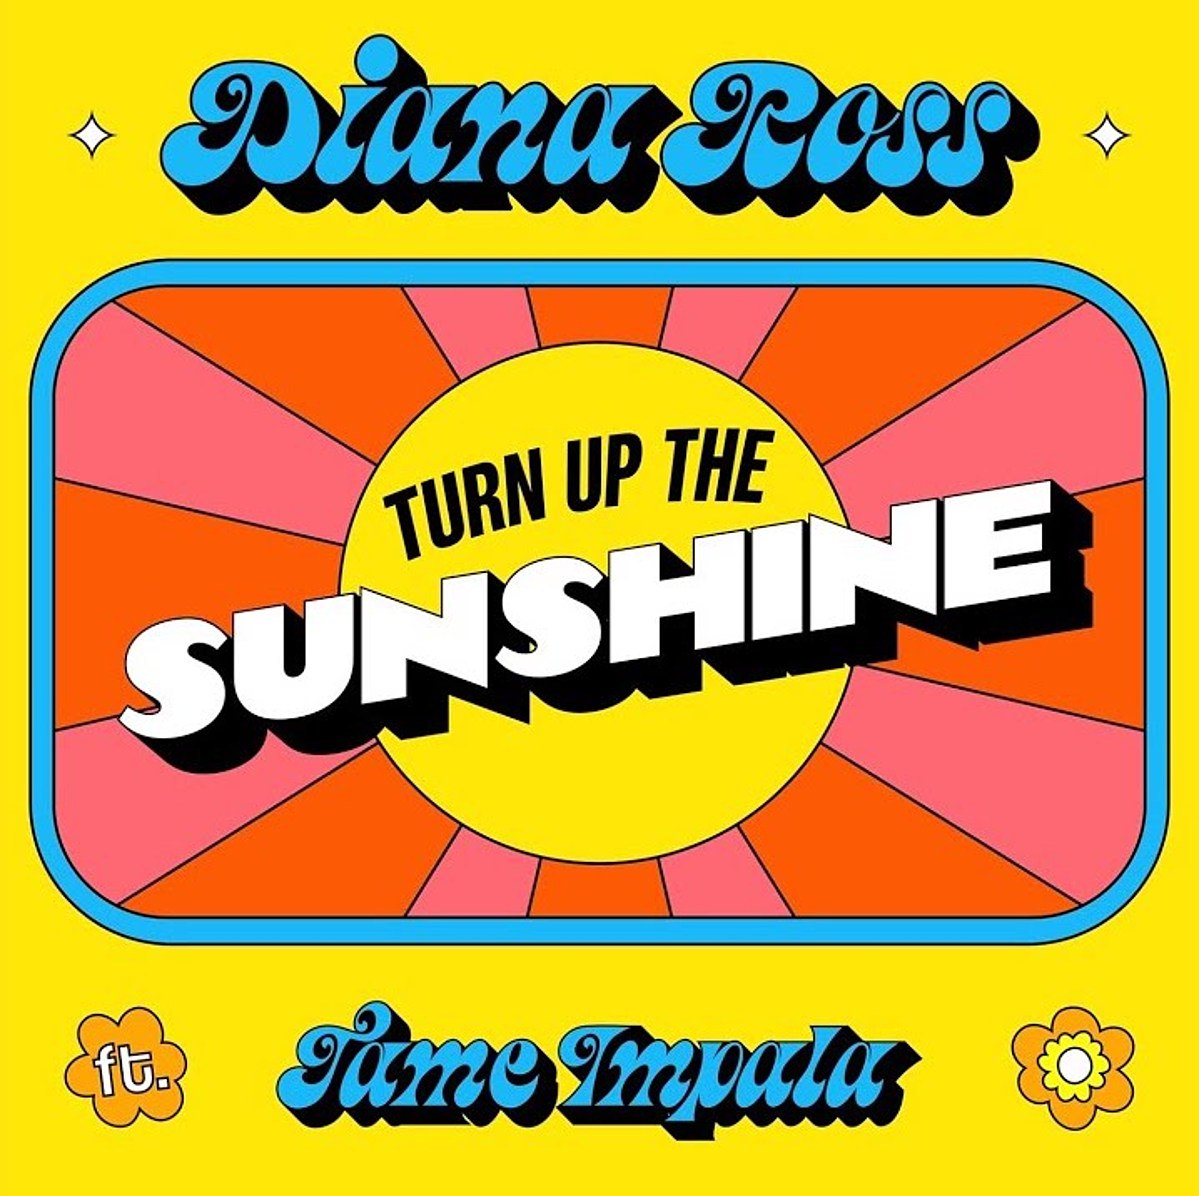 Diana Ross & Tame Impala — Turn Up The Sunshine cover artwork